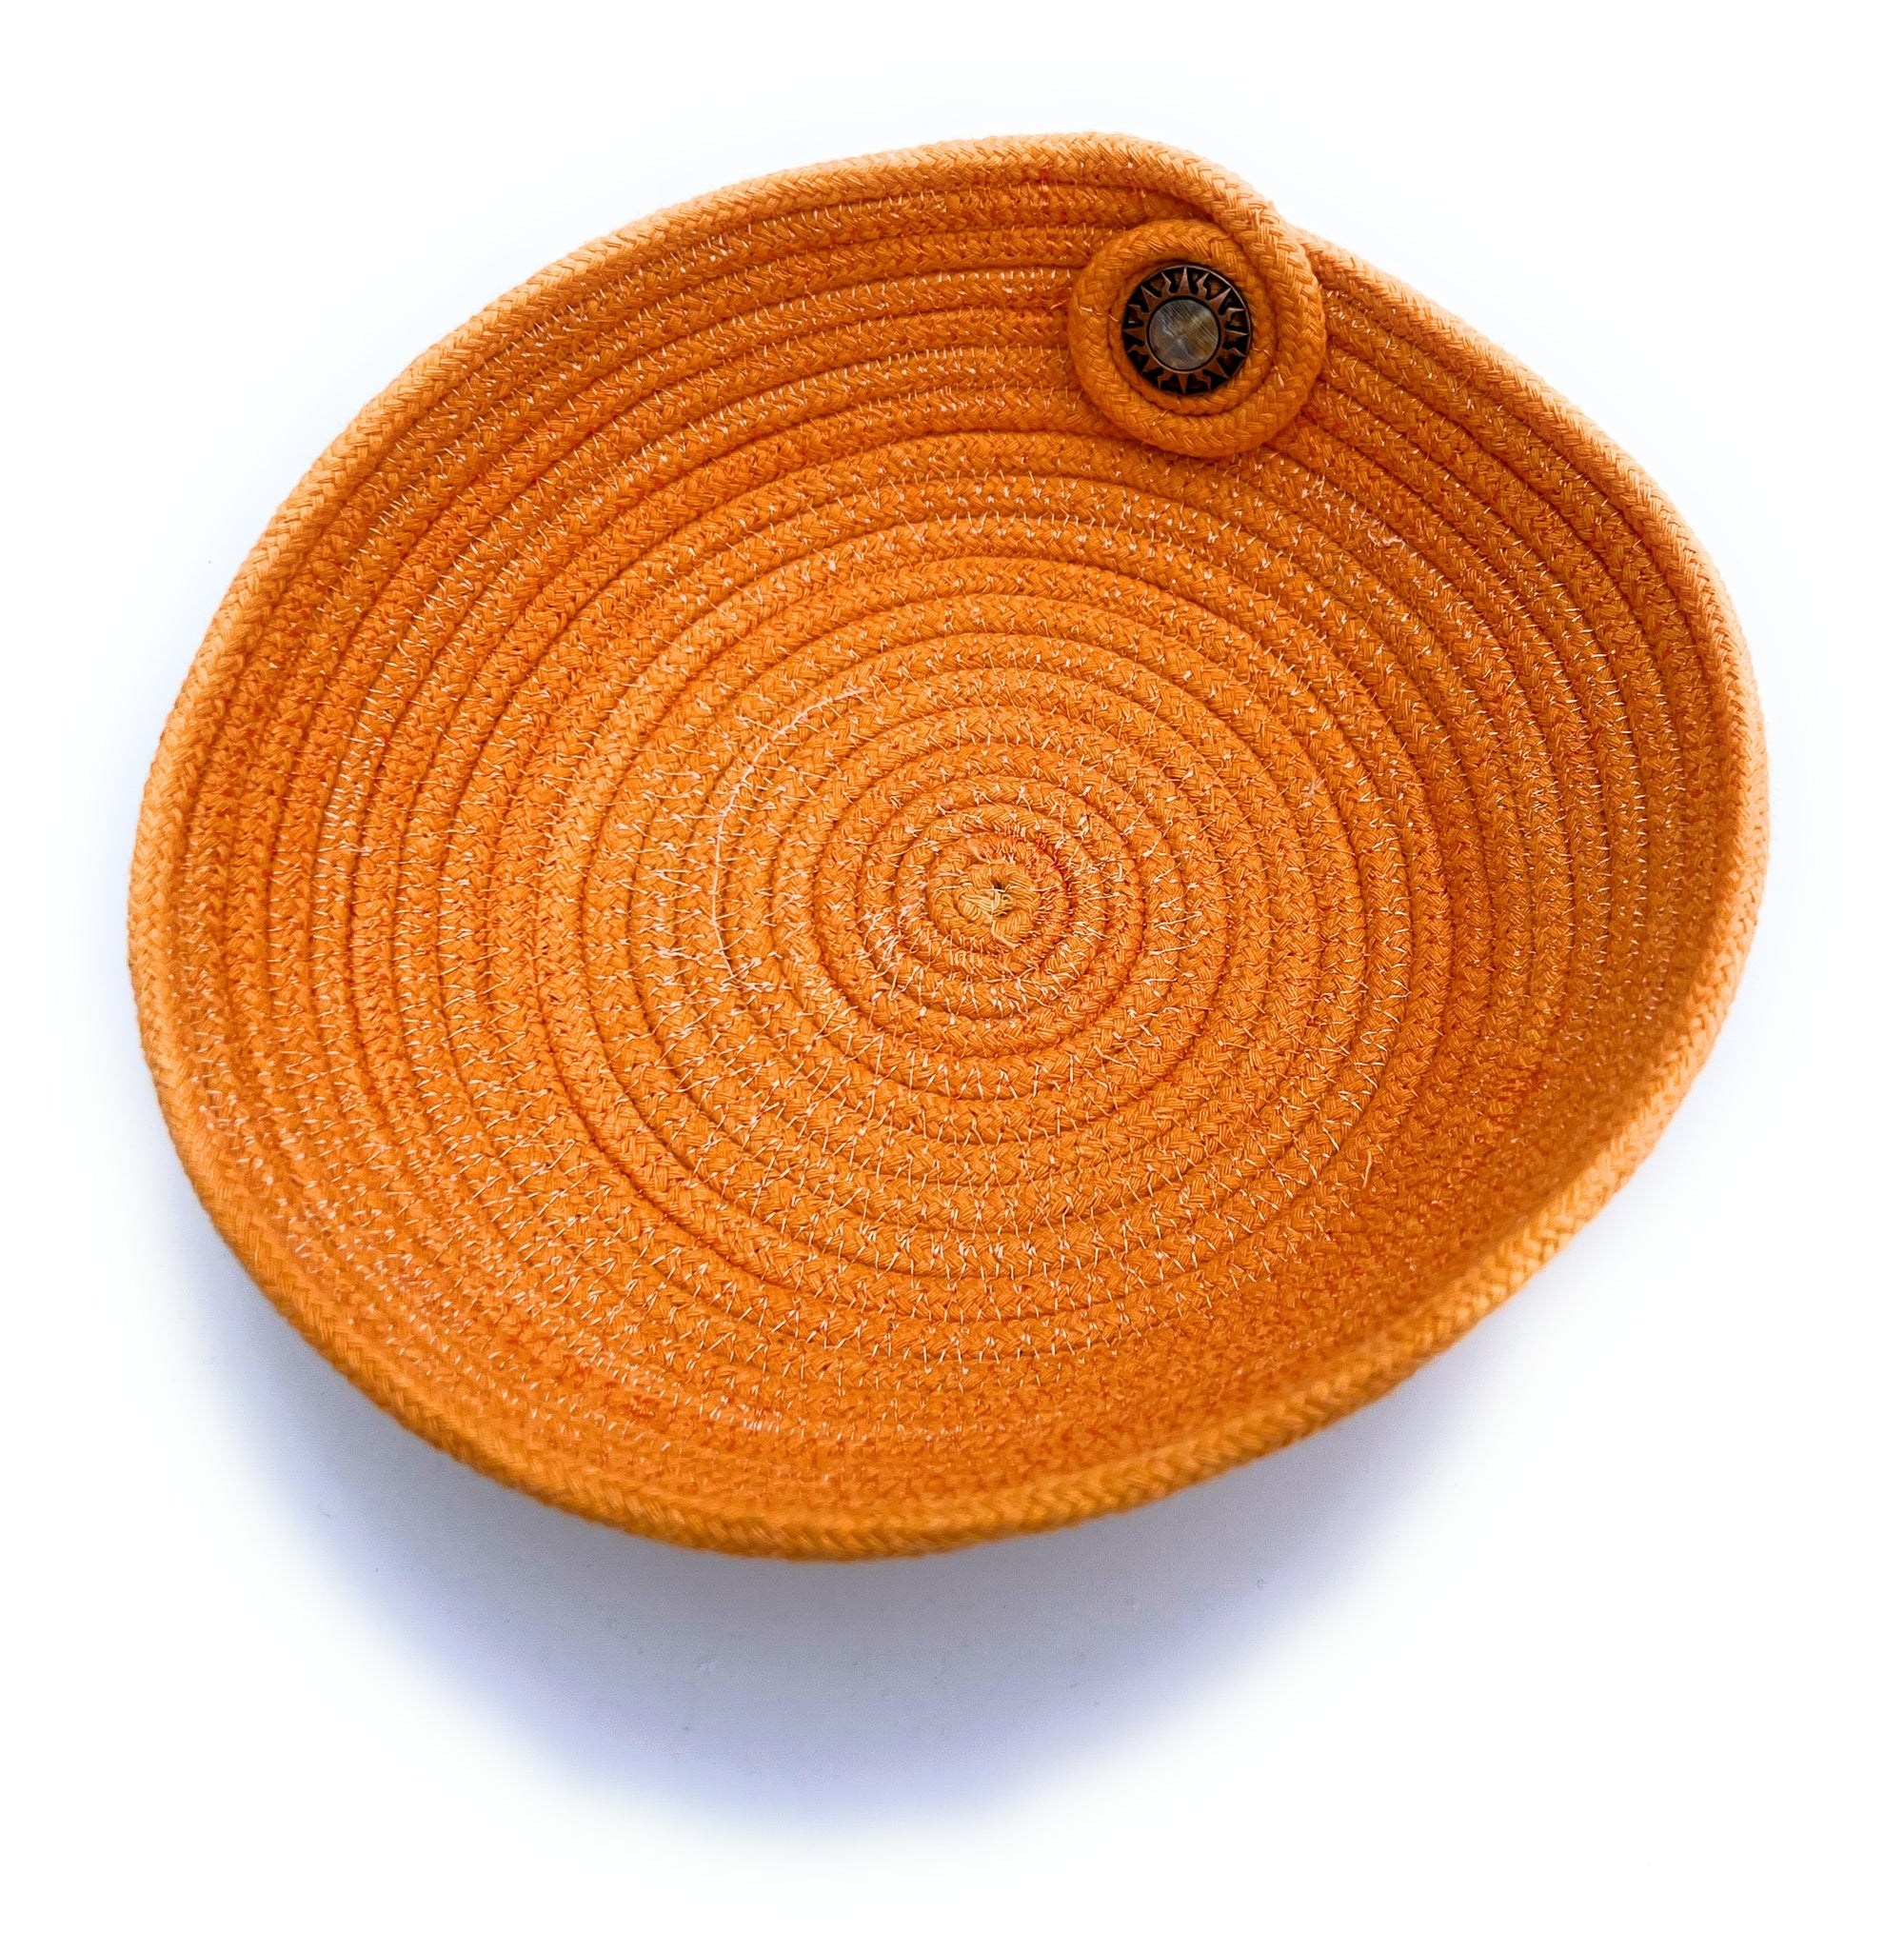 Coiled Rope Bowl in Tangerine Orange